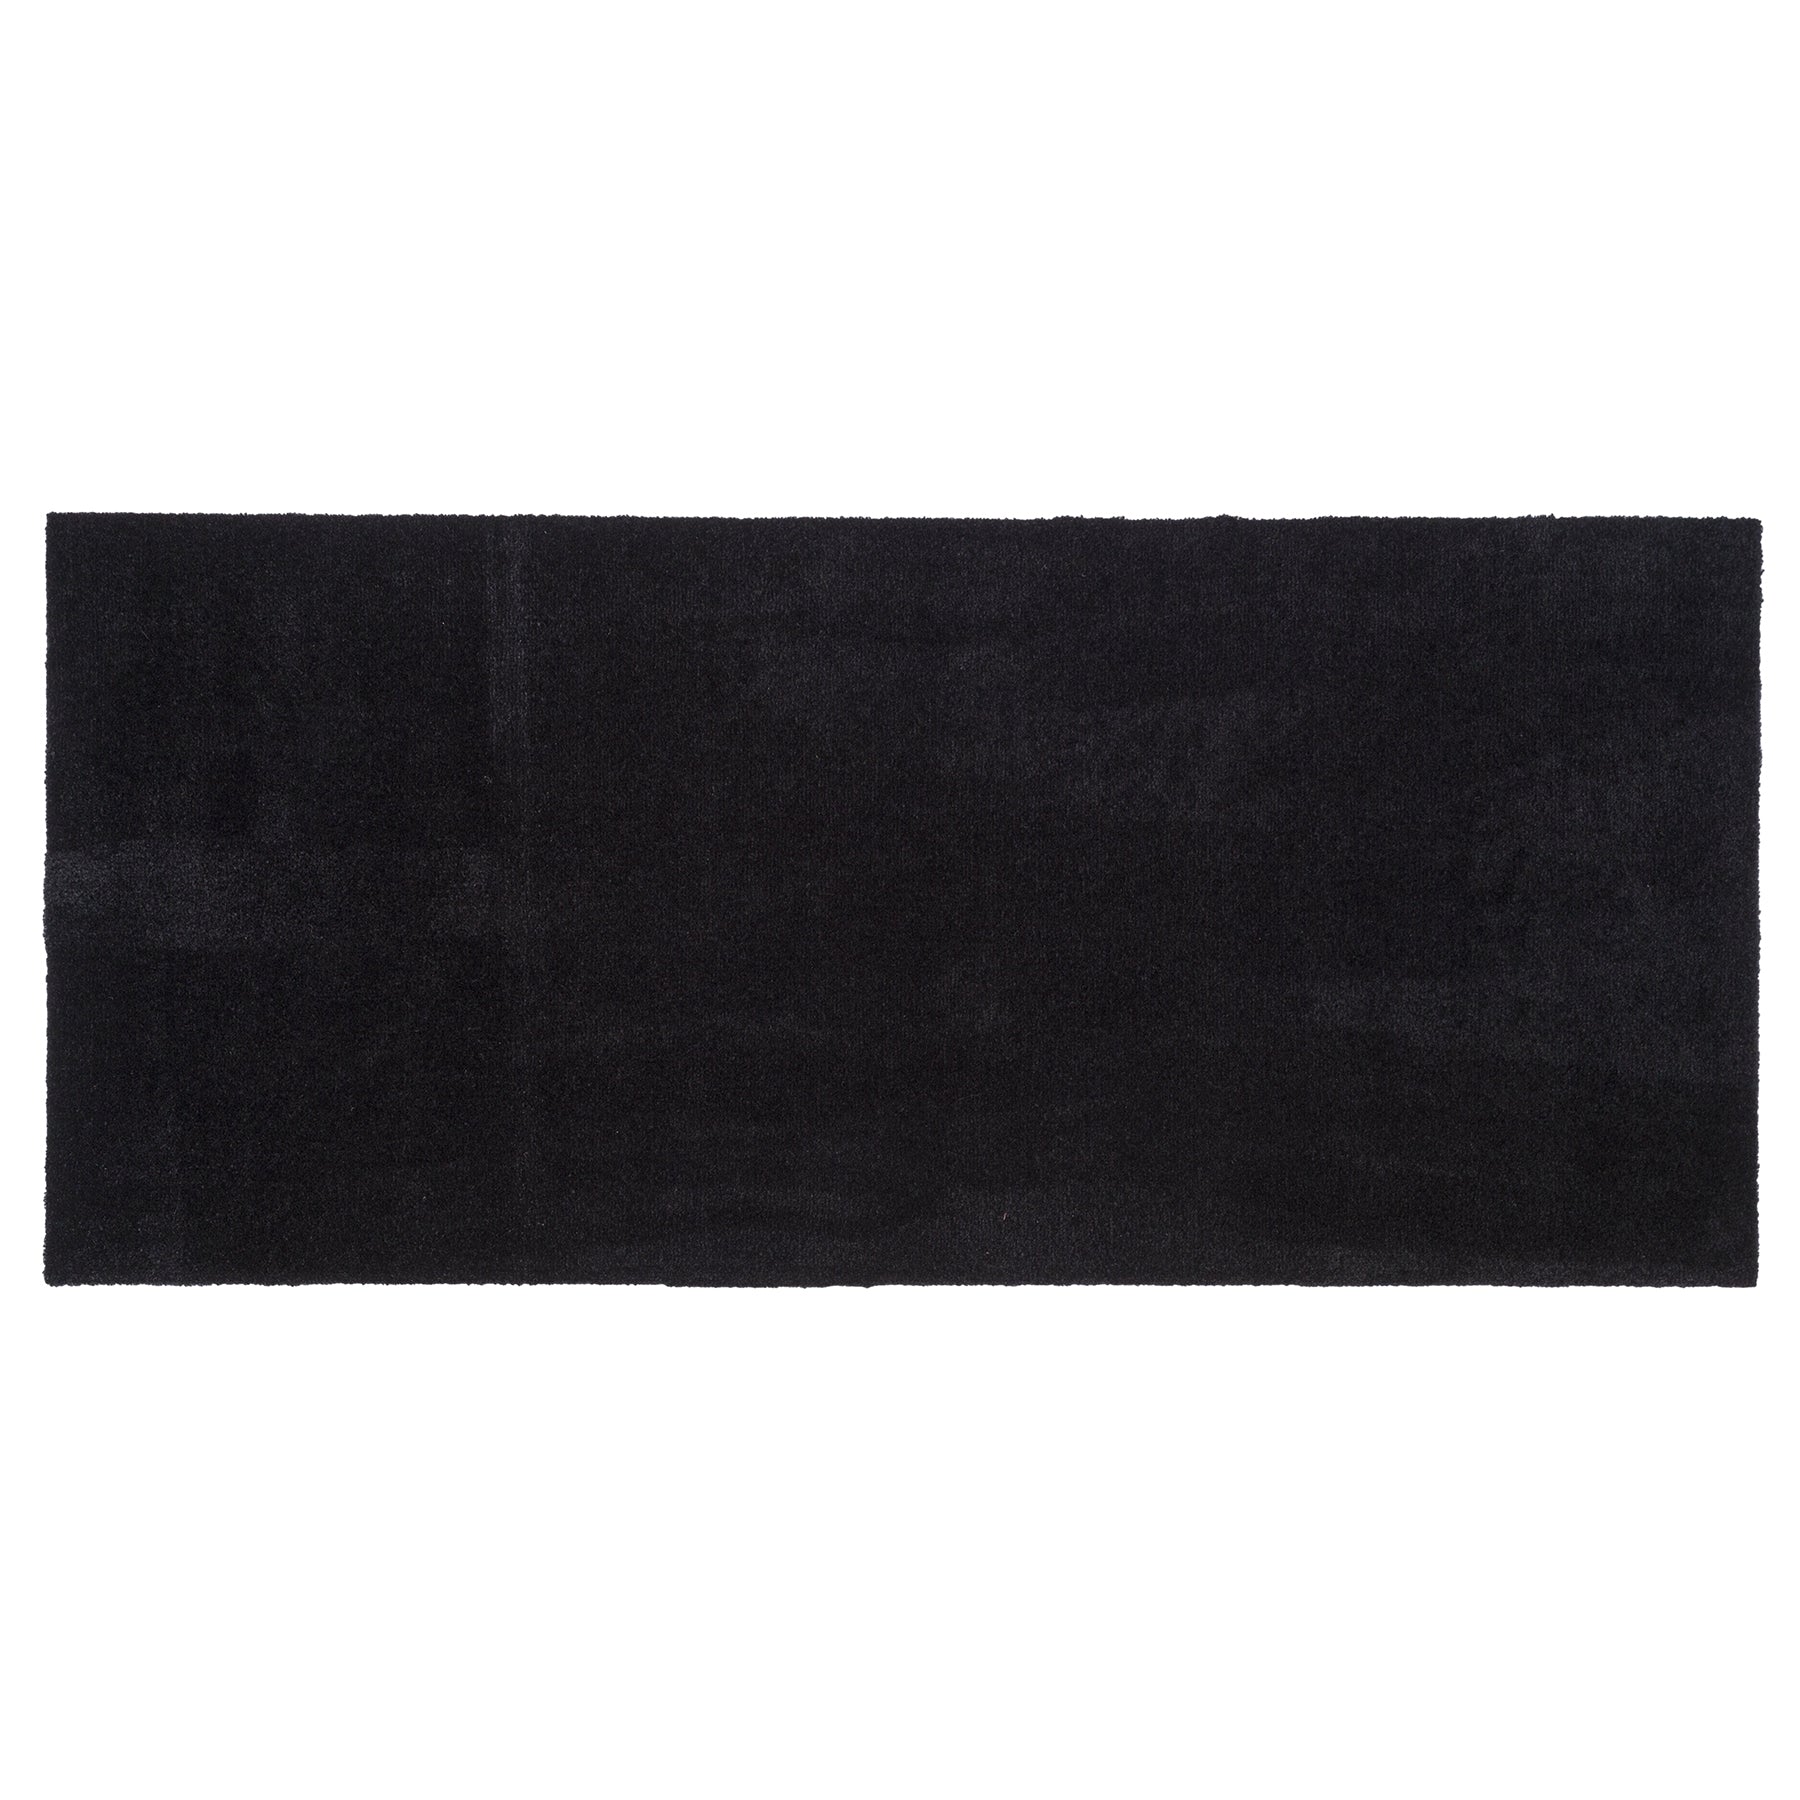 GULF MEASURE 67 x 150 CM - UNI COLOUR/BLACK